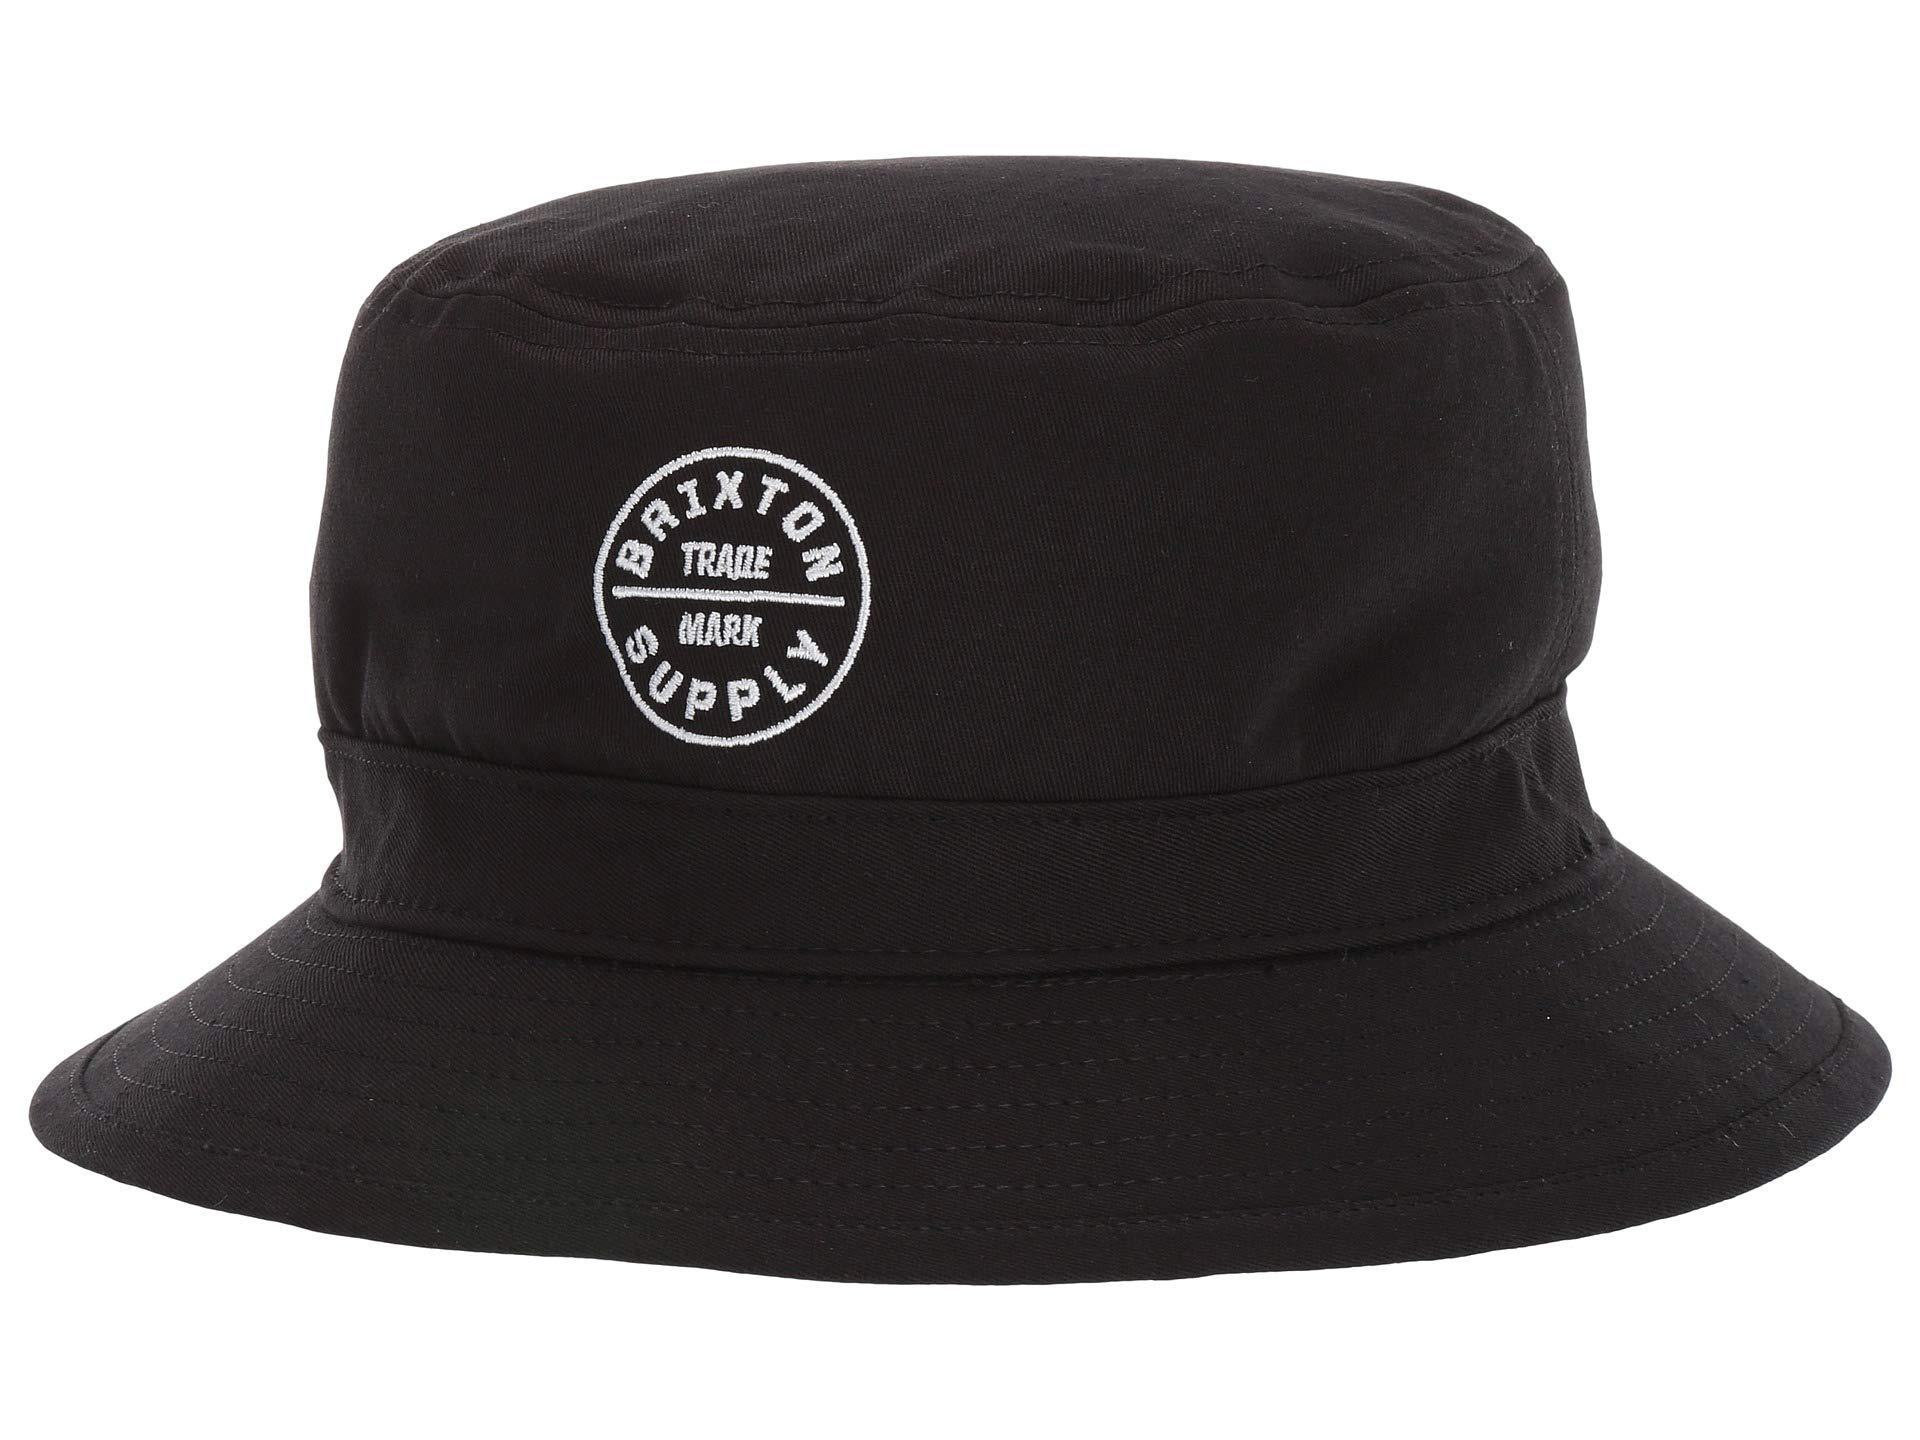 Brixton Cotton Oath Bucket Hat in Black for Men - Save 10% - Lyst